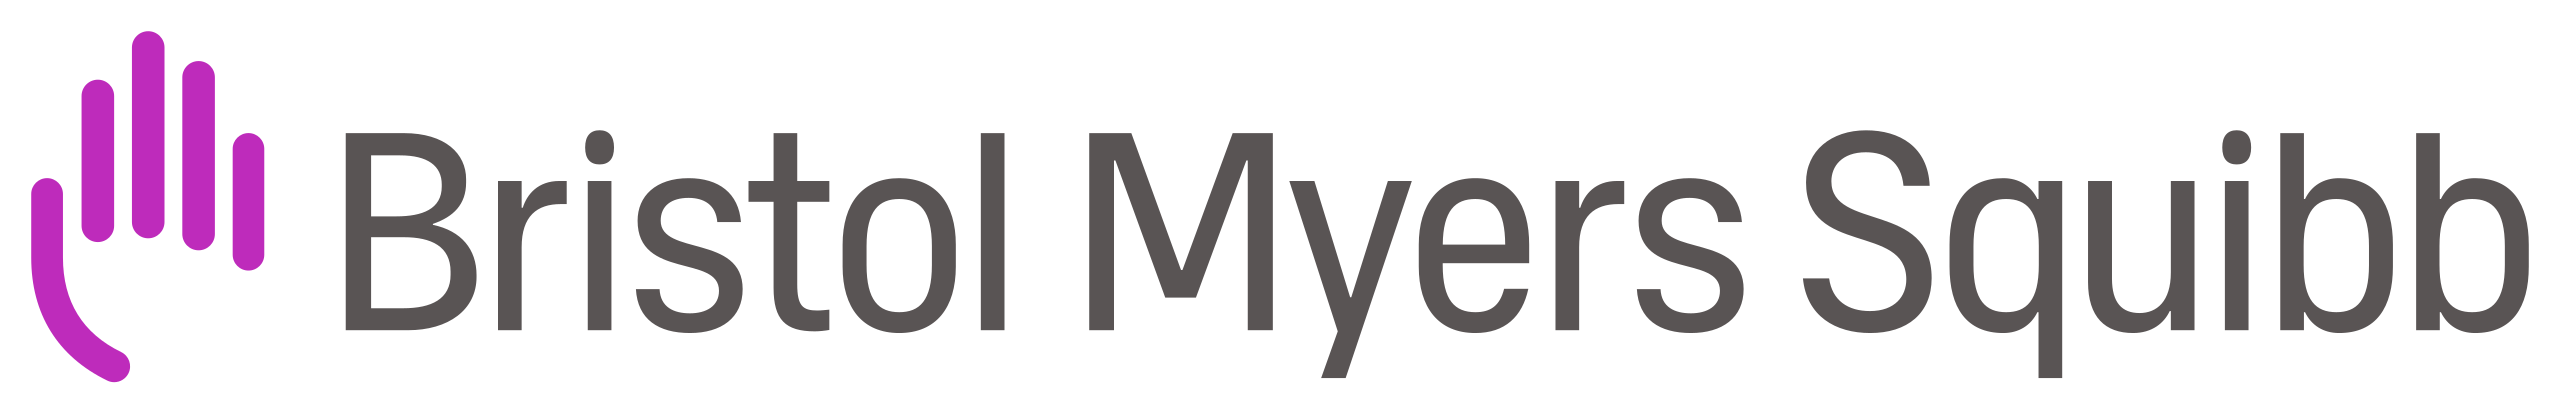 Logo of Bristol-Myers Squibb